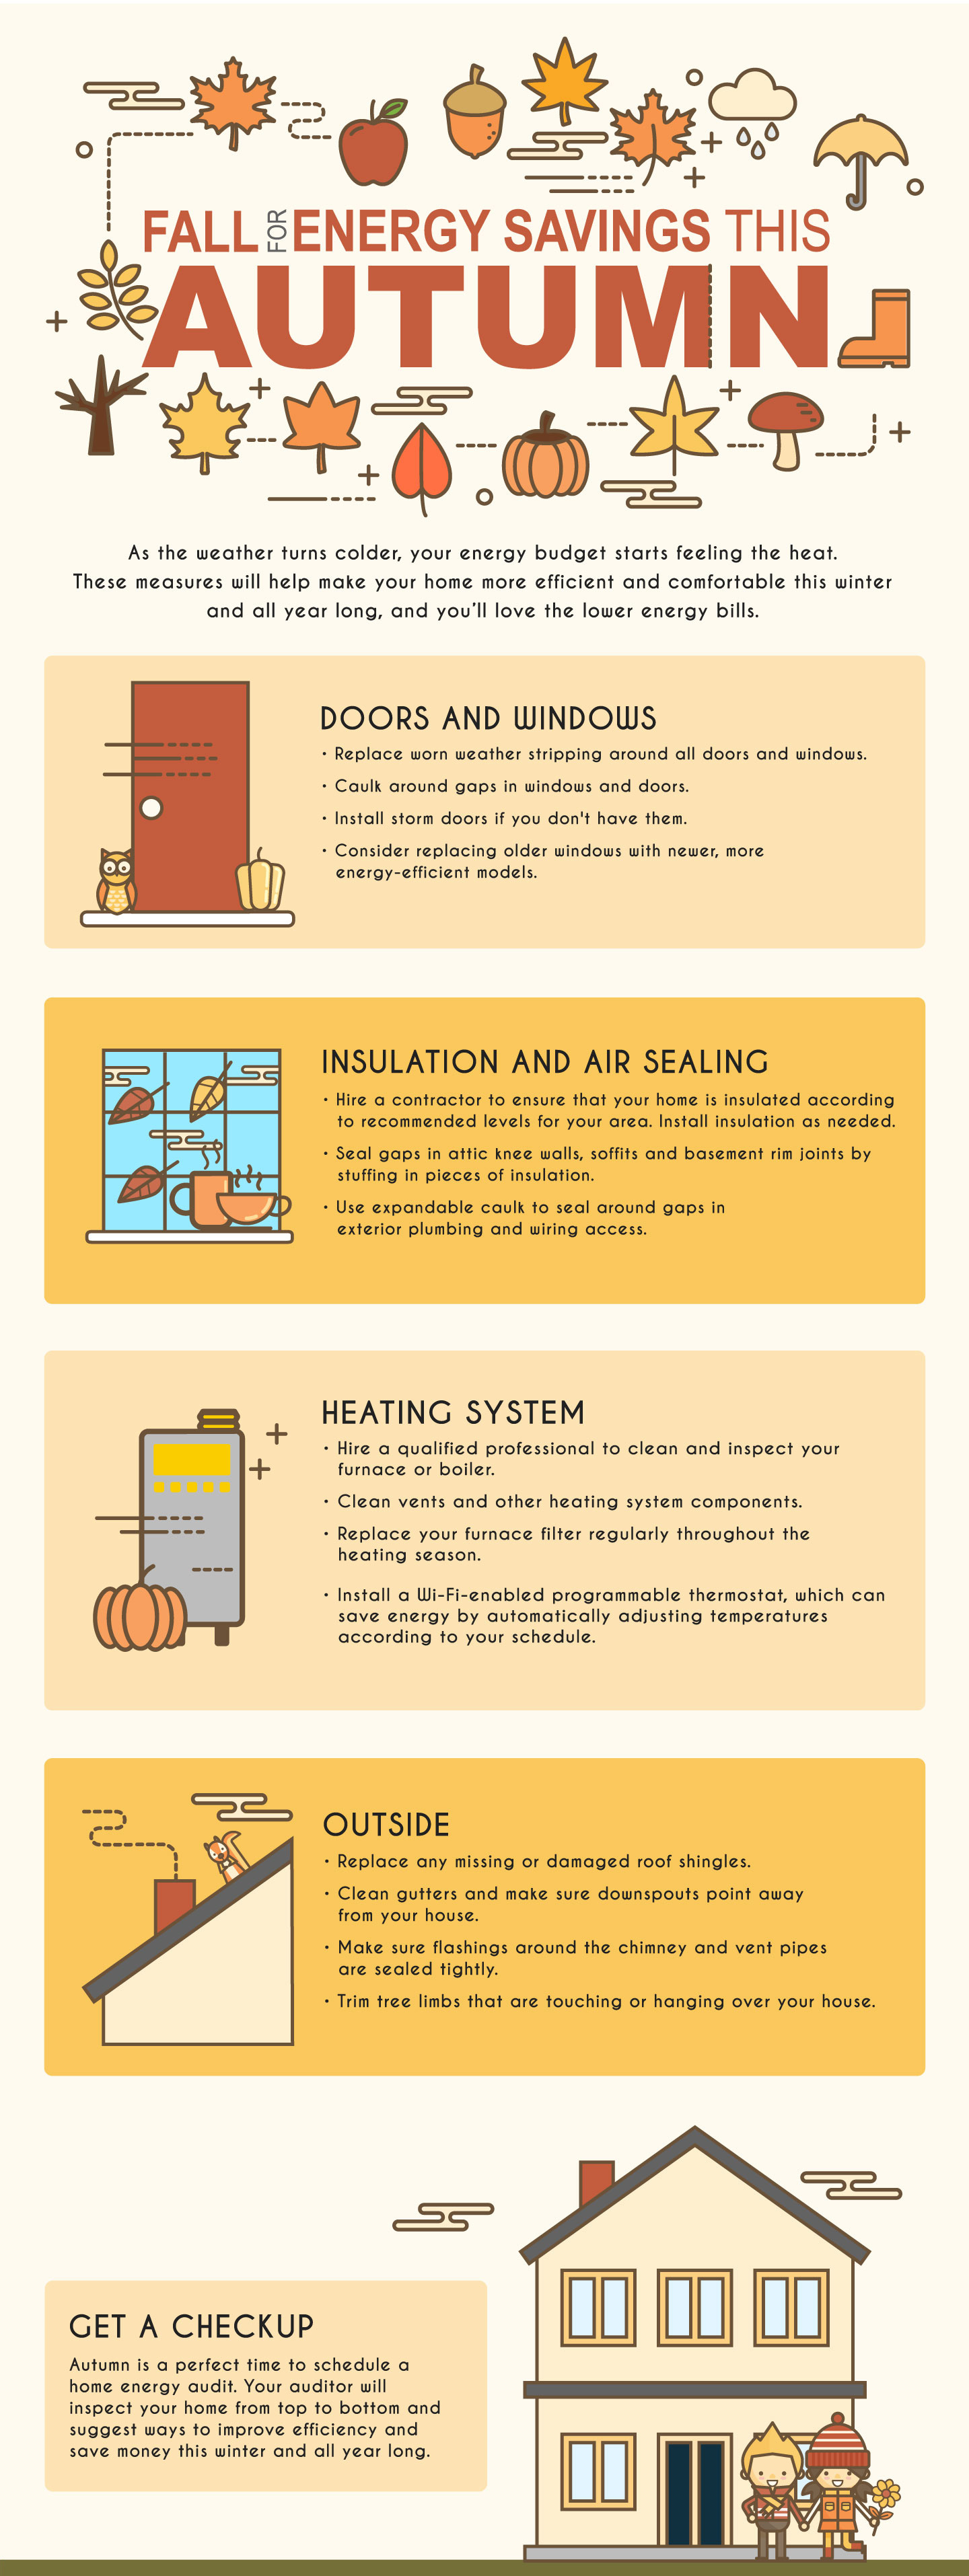 Fall for Energy Savings Infographic